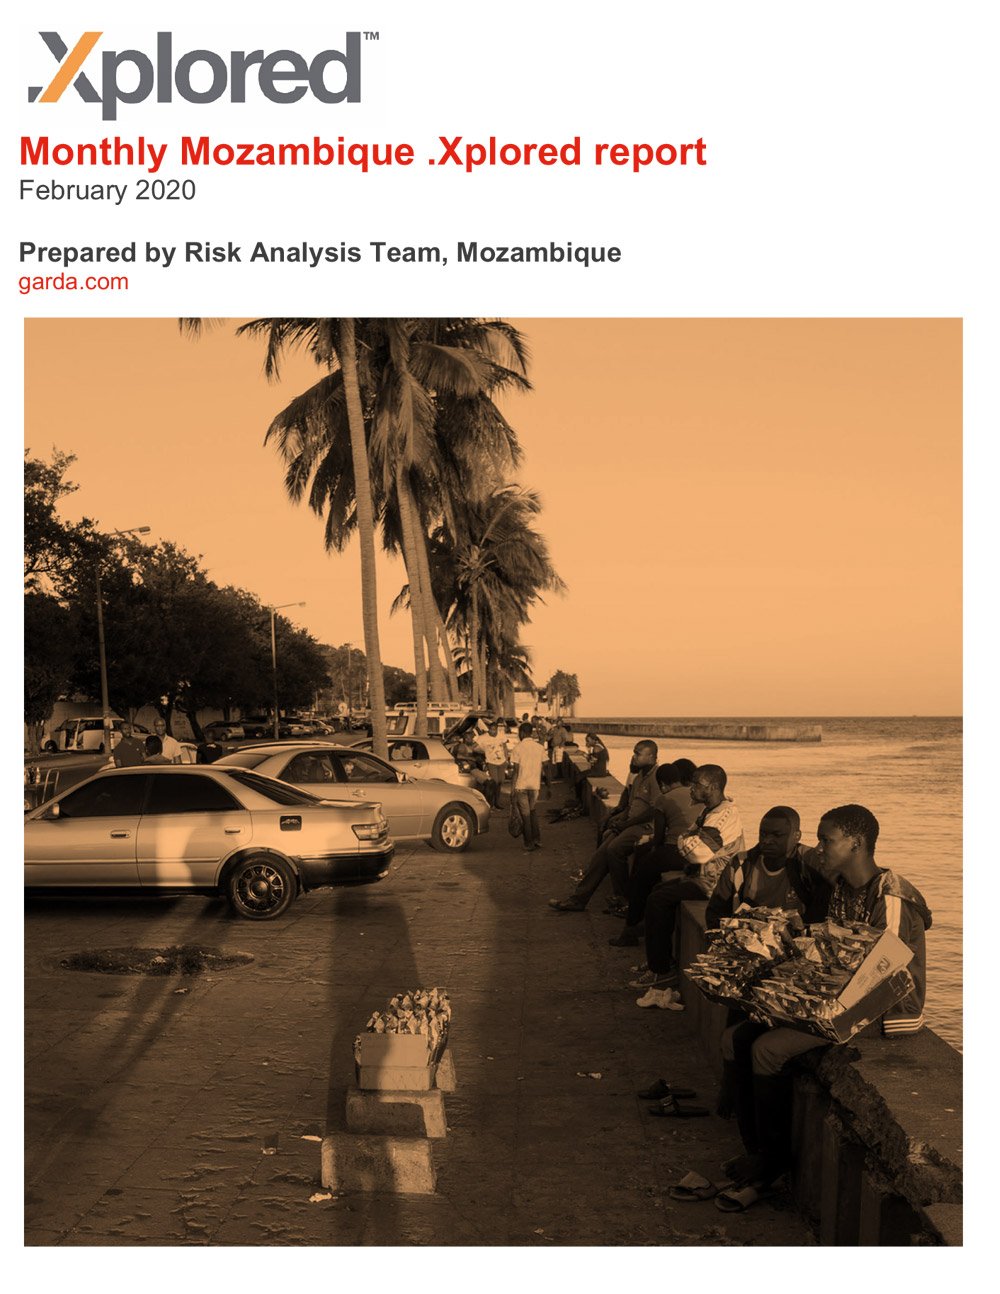 GardaWorld Monthly Mozambique .Xplored February 2020 risk report